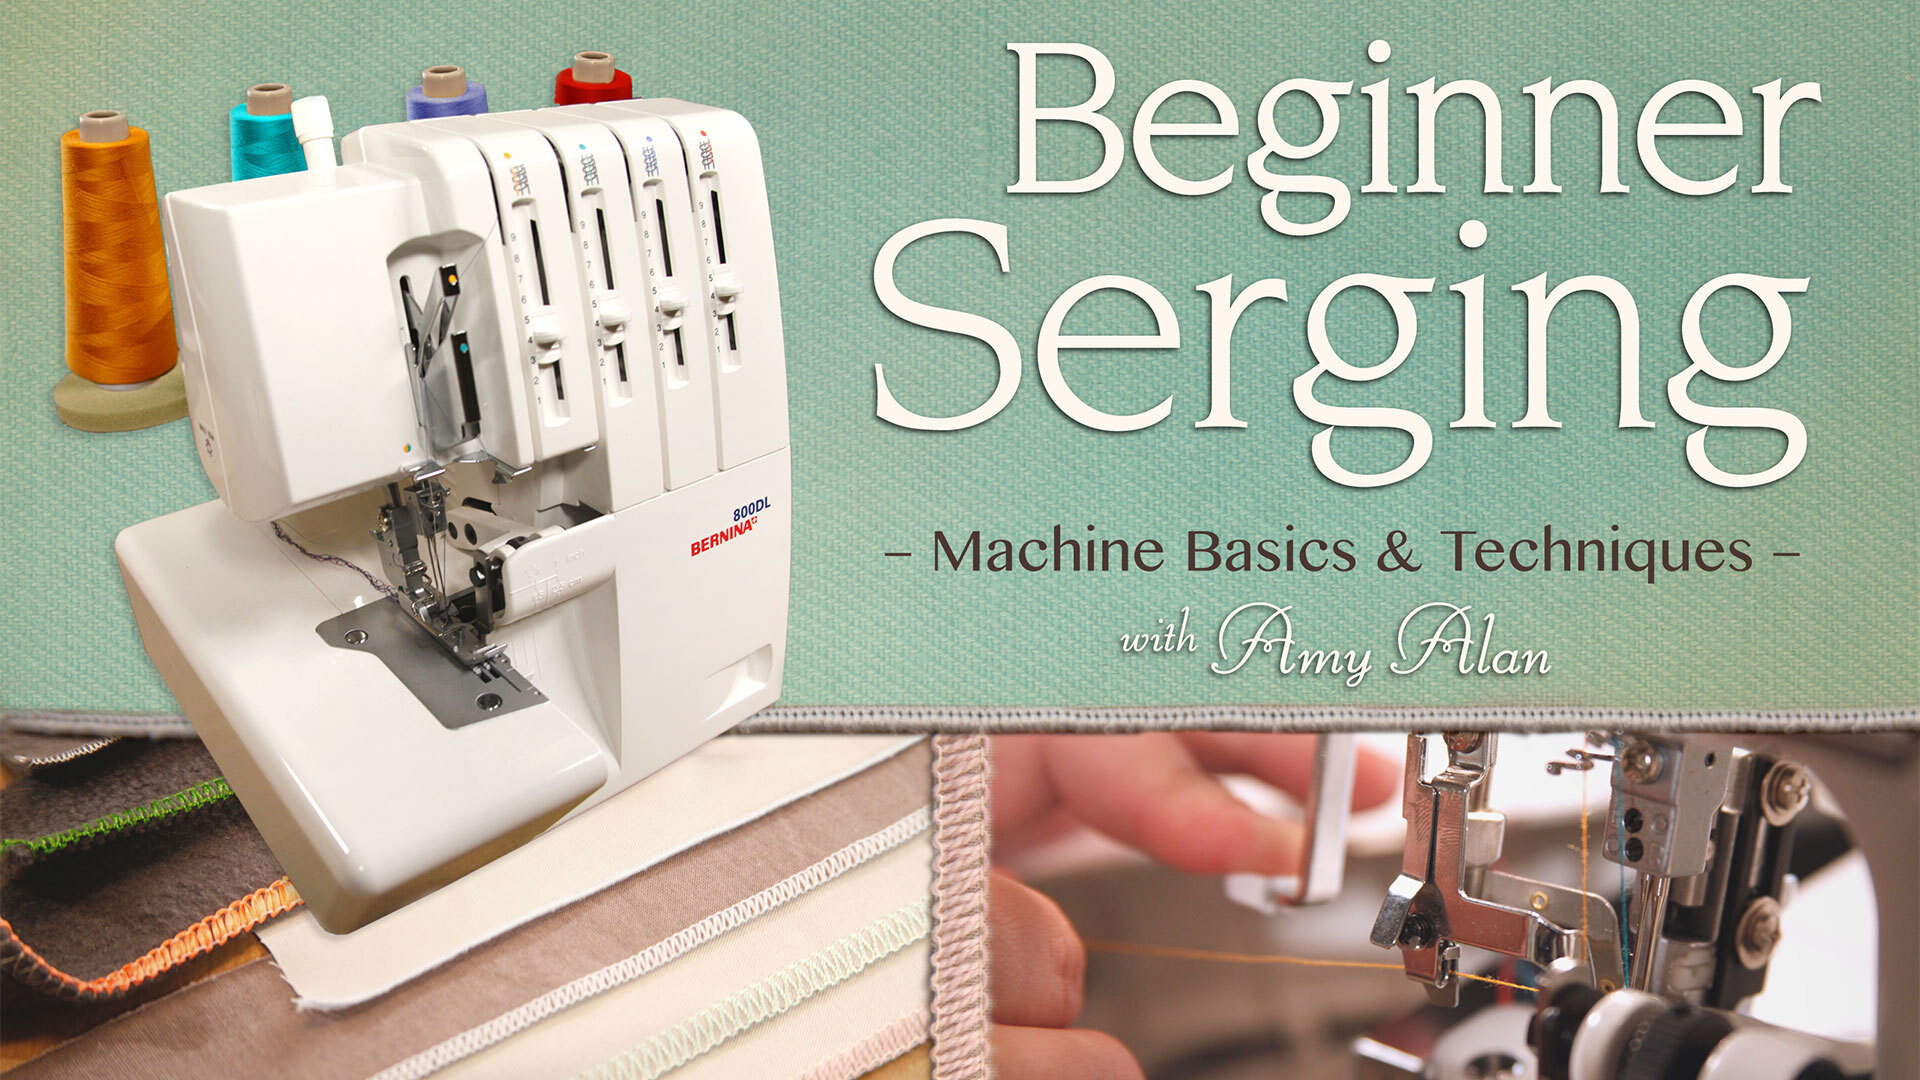 Online Serger Beginner 101 Sewing Lesson. Types of Serger Threads